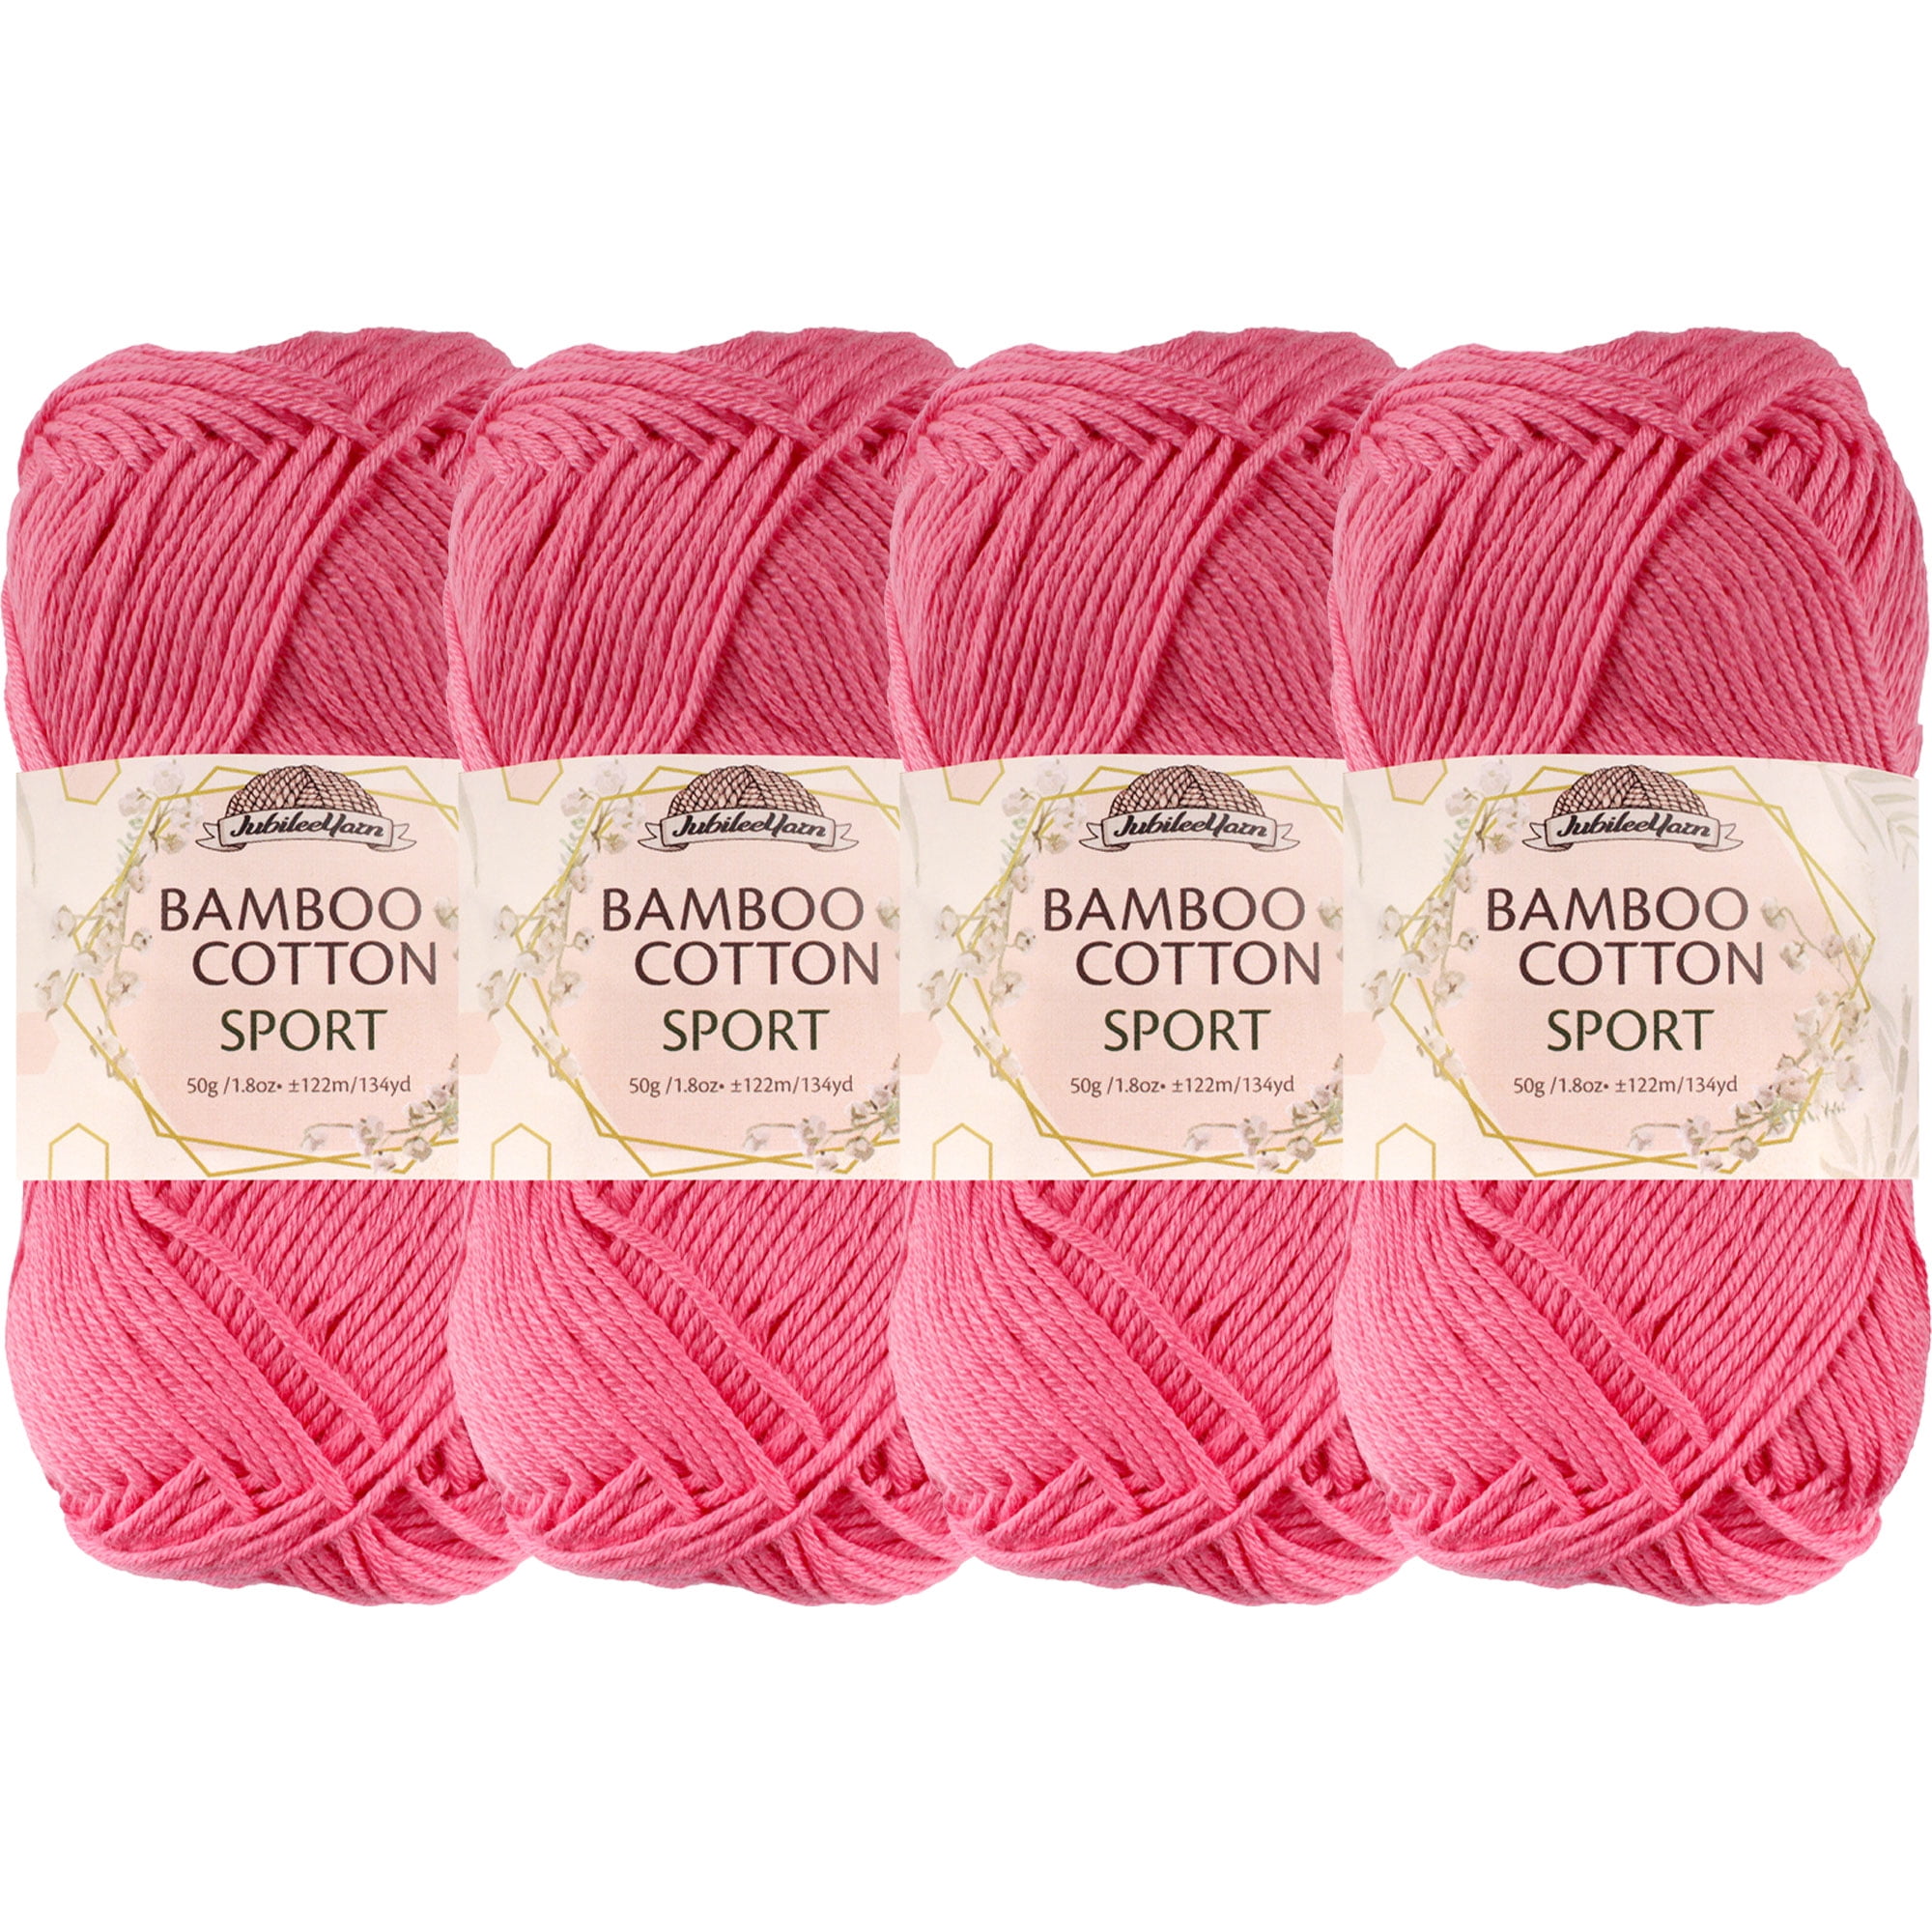 JubileeYarn Bamboo Cotton Sport 4 Ply Yarn - 50g/skein - Cotton Candy - 4  Skeins 